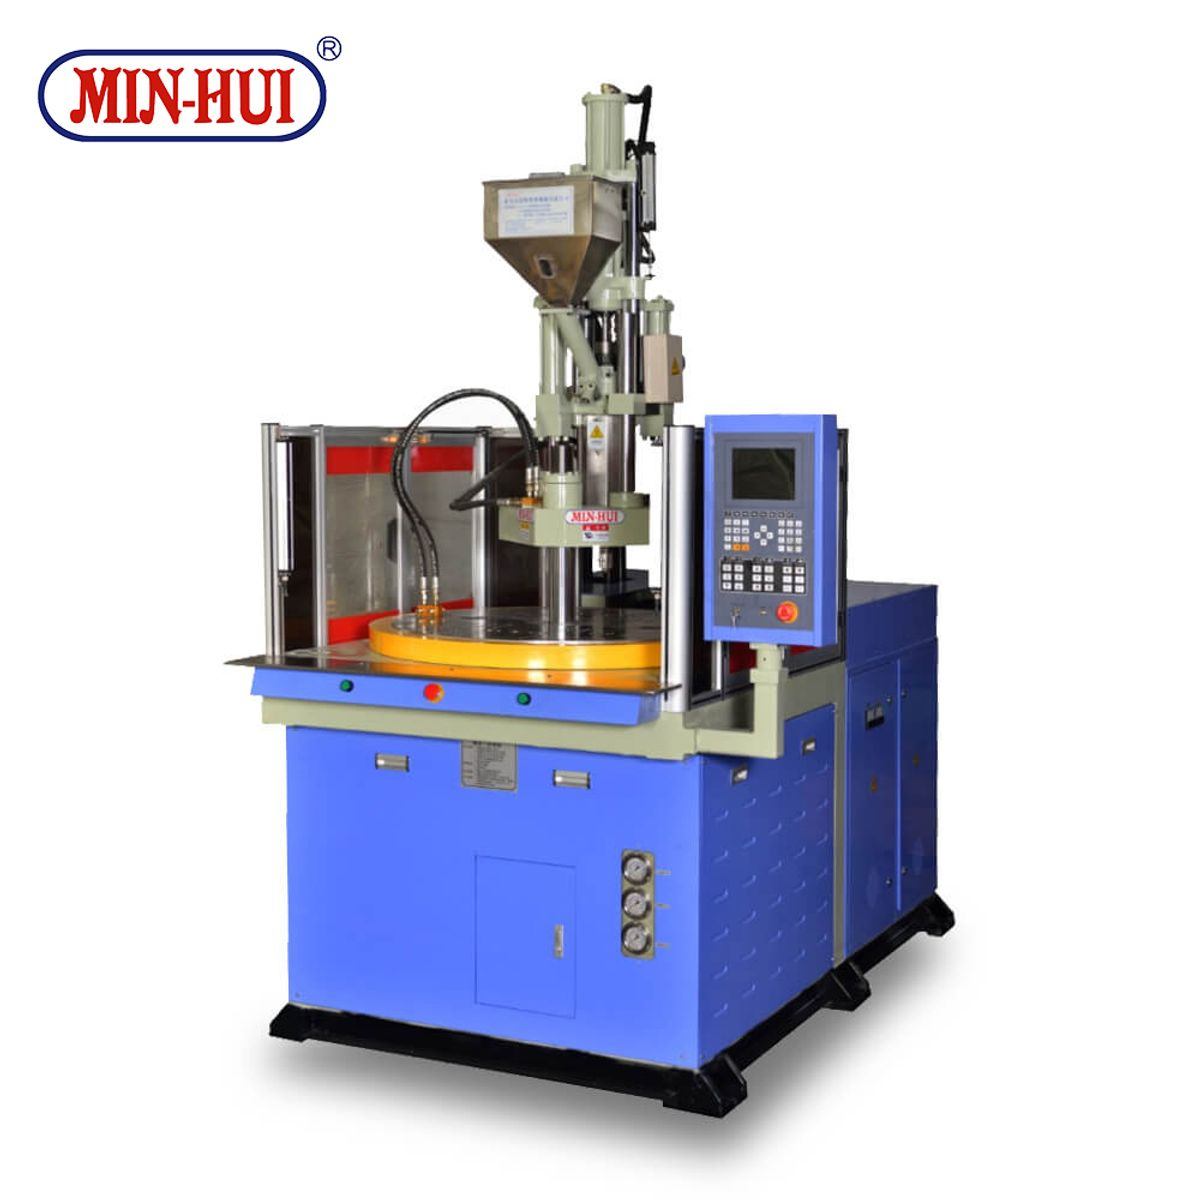 Min-Hui Rotary Plastic Injection Molding Machine